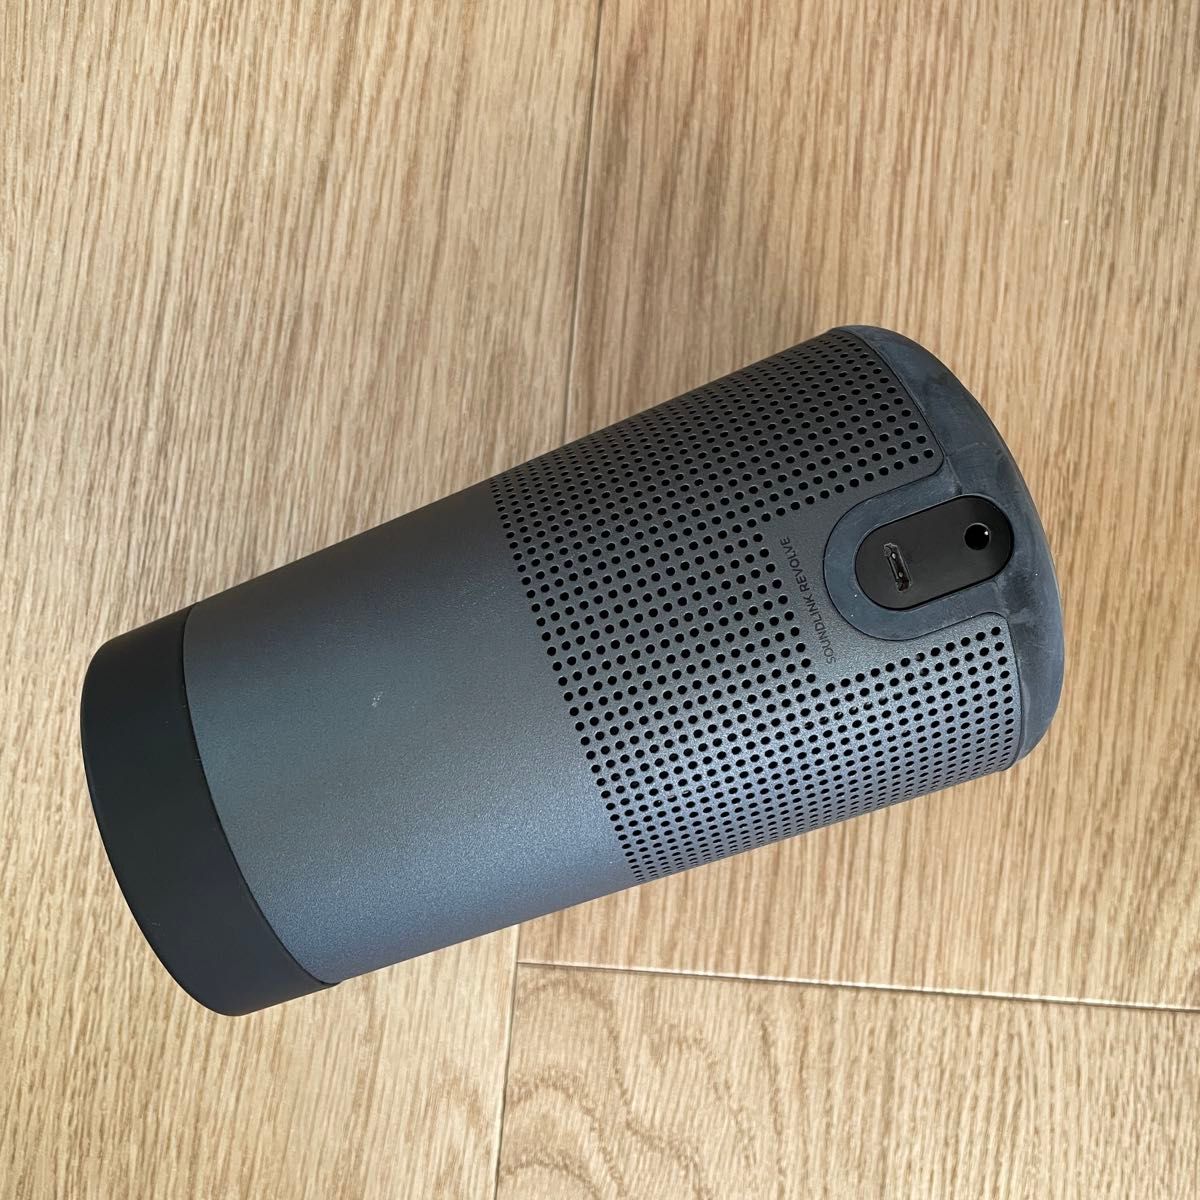 The Bose SoundLink Revolve the Portable Bluetooth Speaker 